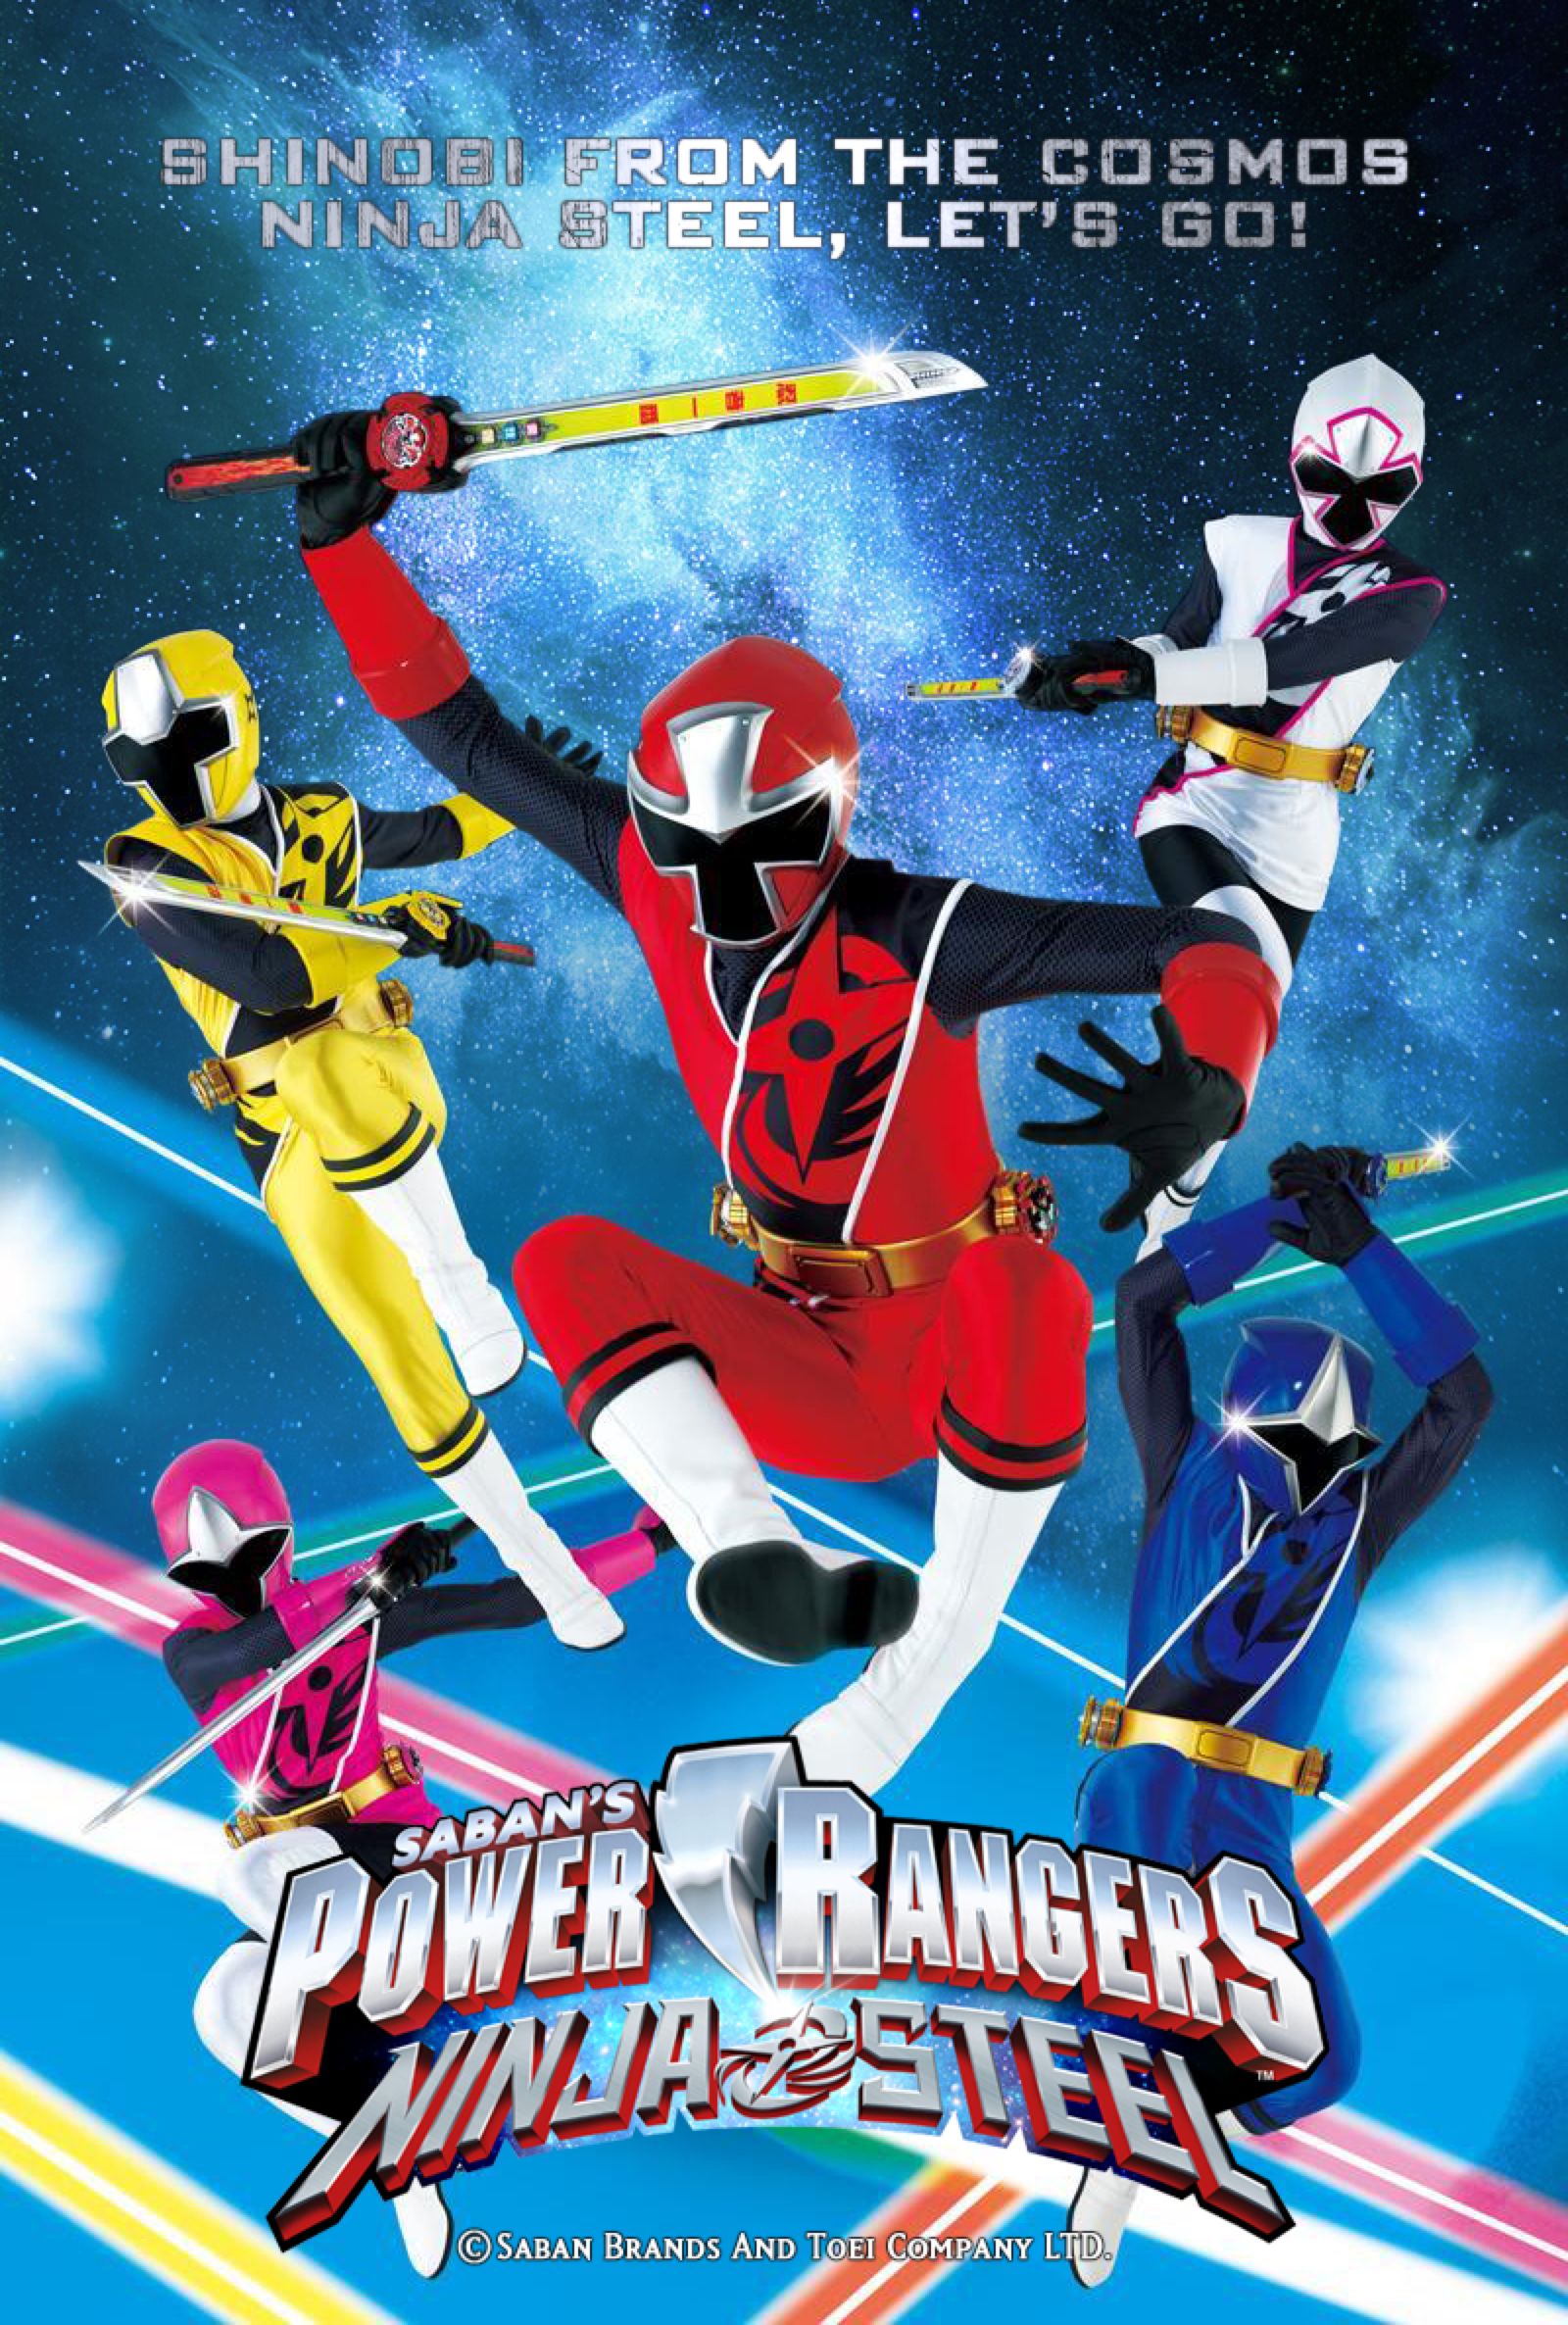 Power Rangers of the Ninja Triple